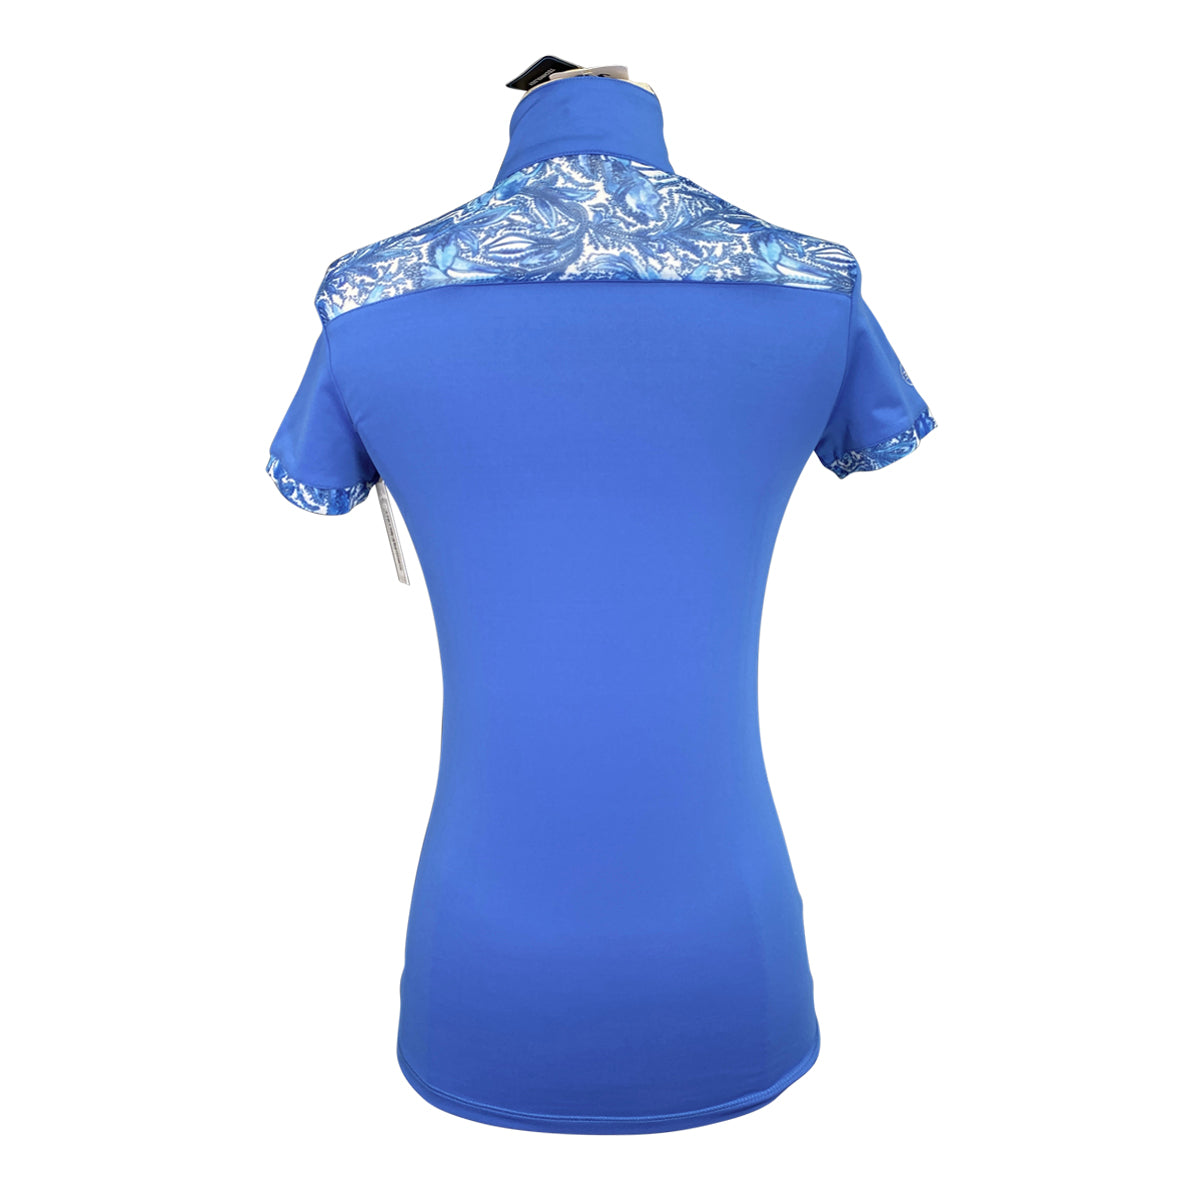 R.J. Classics 'Maya' 37.5 Short Sleeve Training Shirt in French Blue Paisley